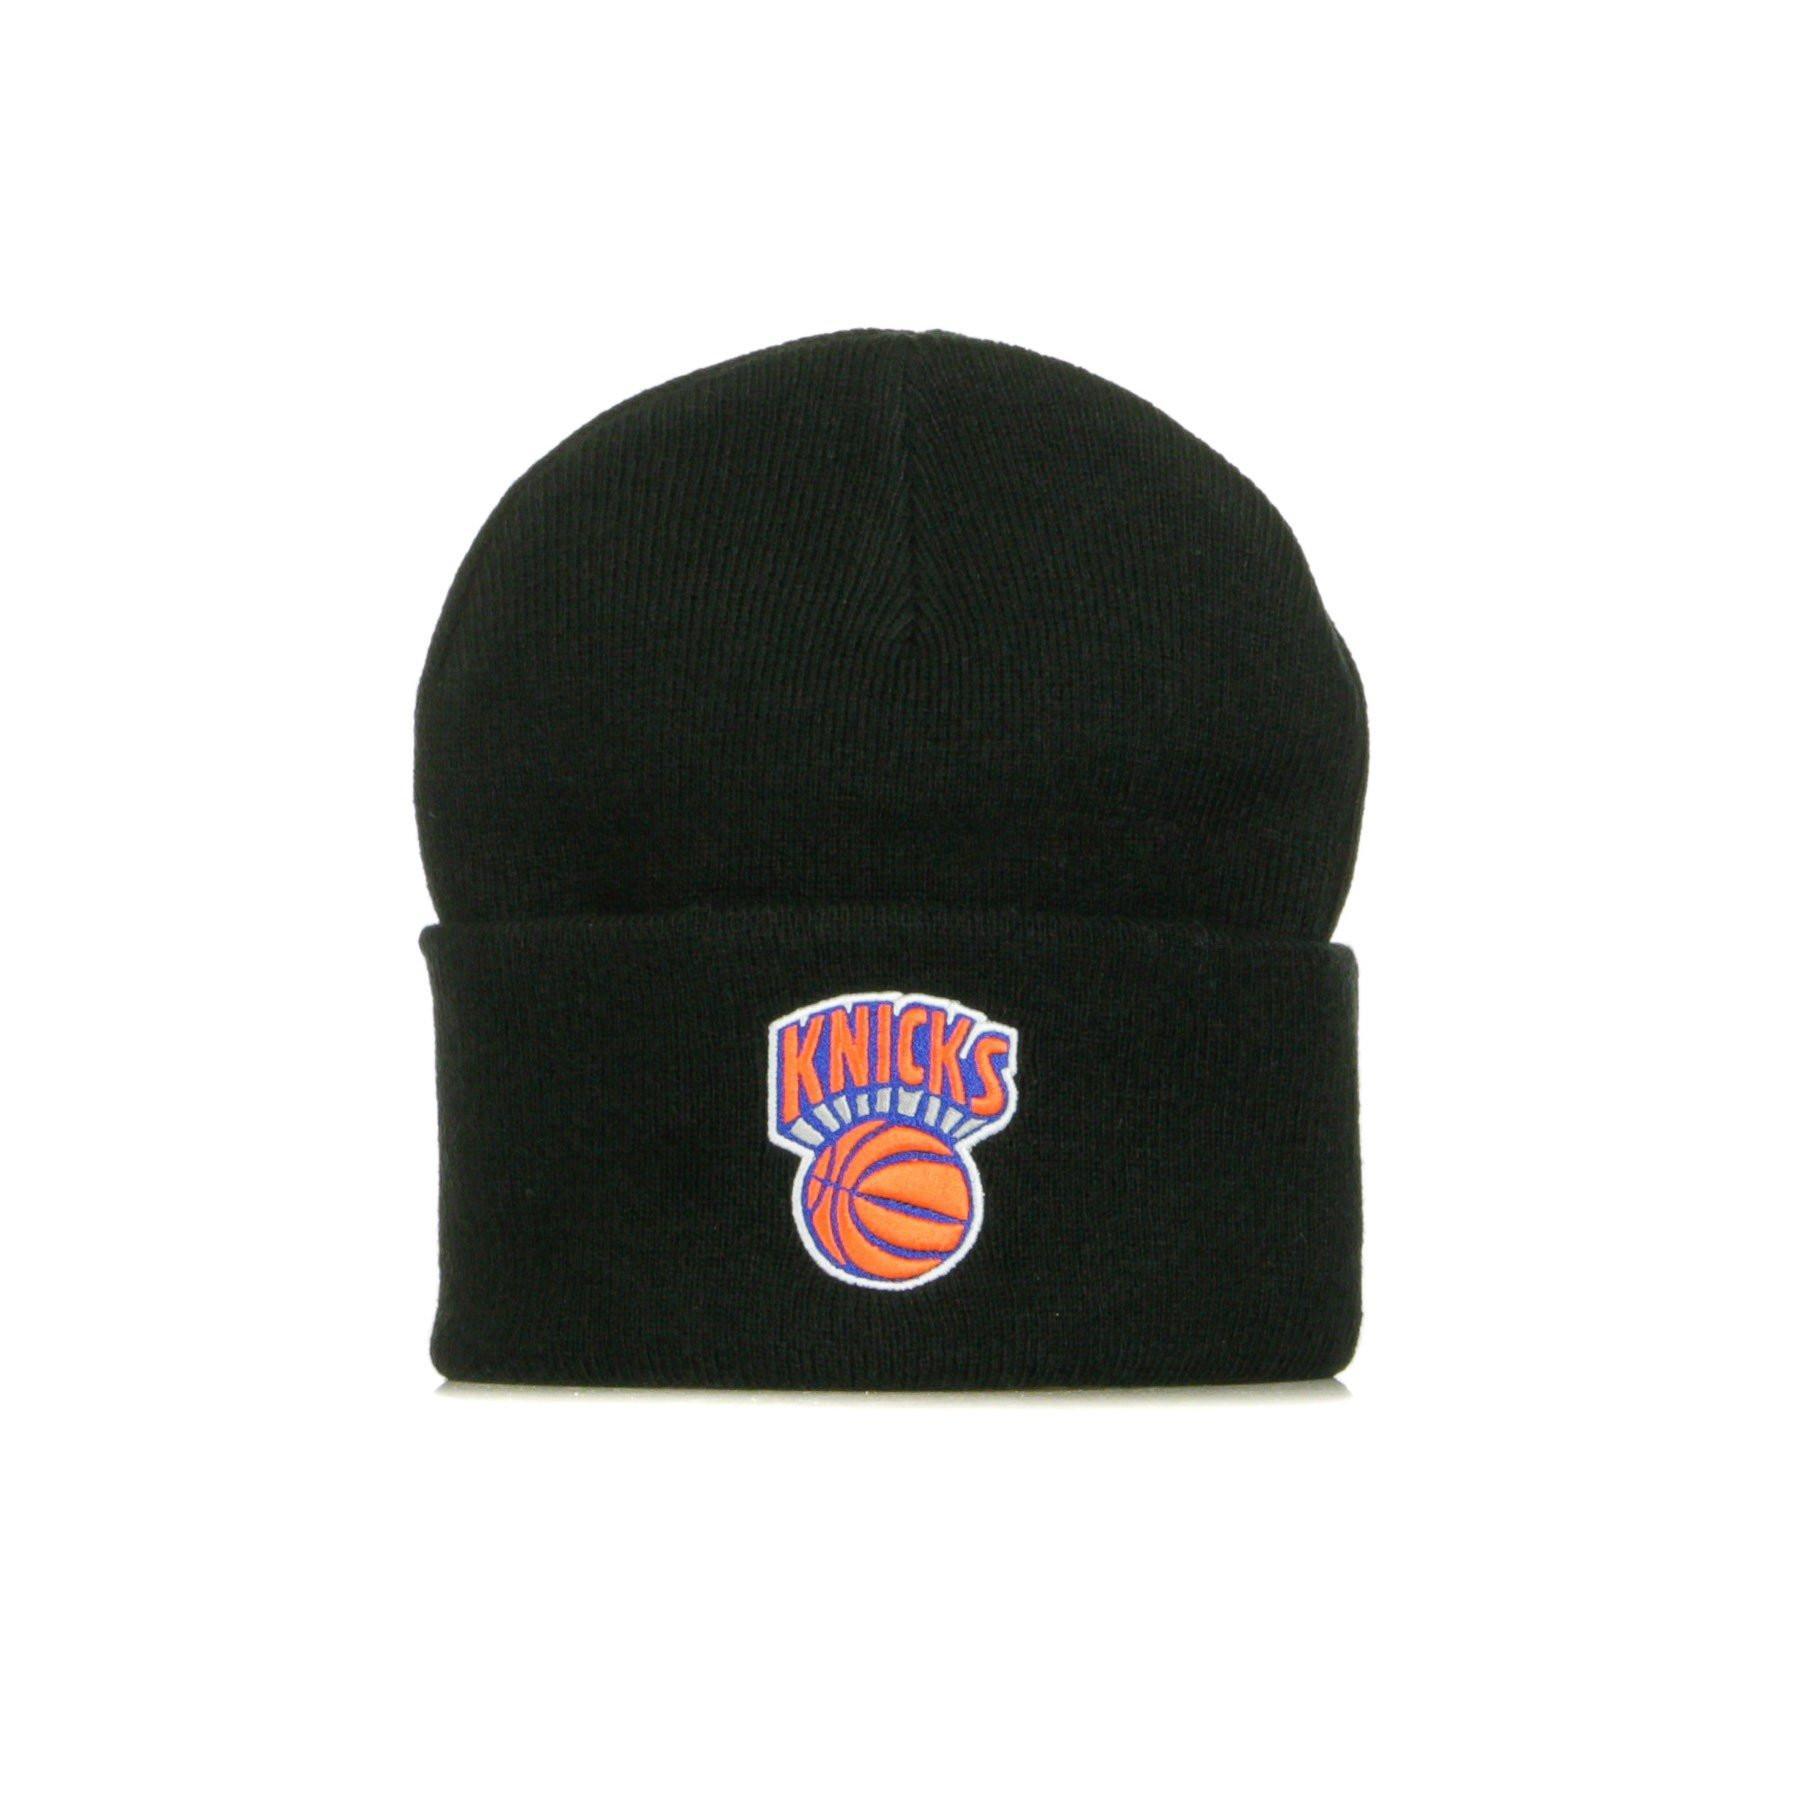 Bonnet New York Knicks team logo